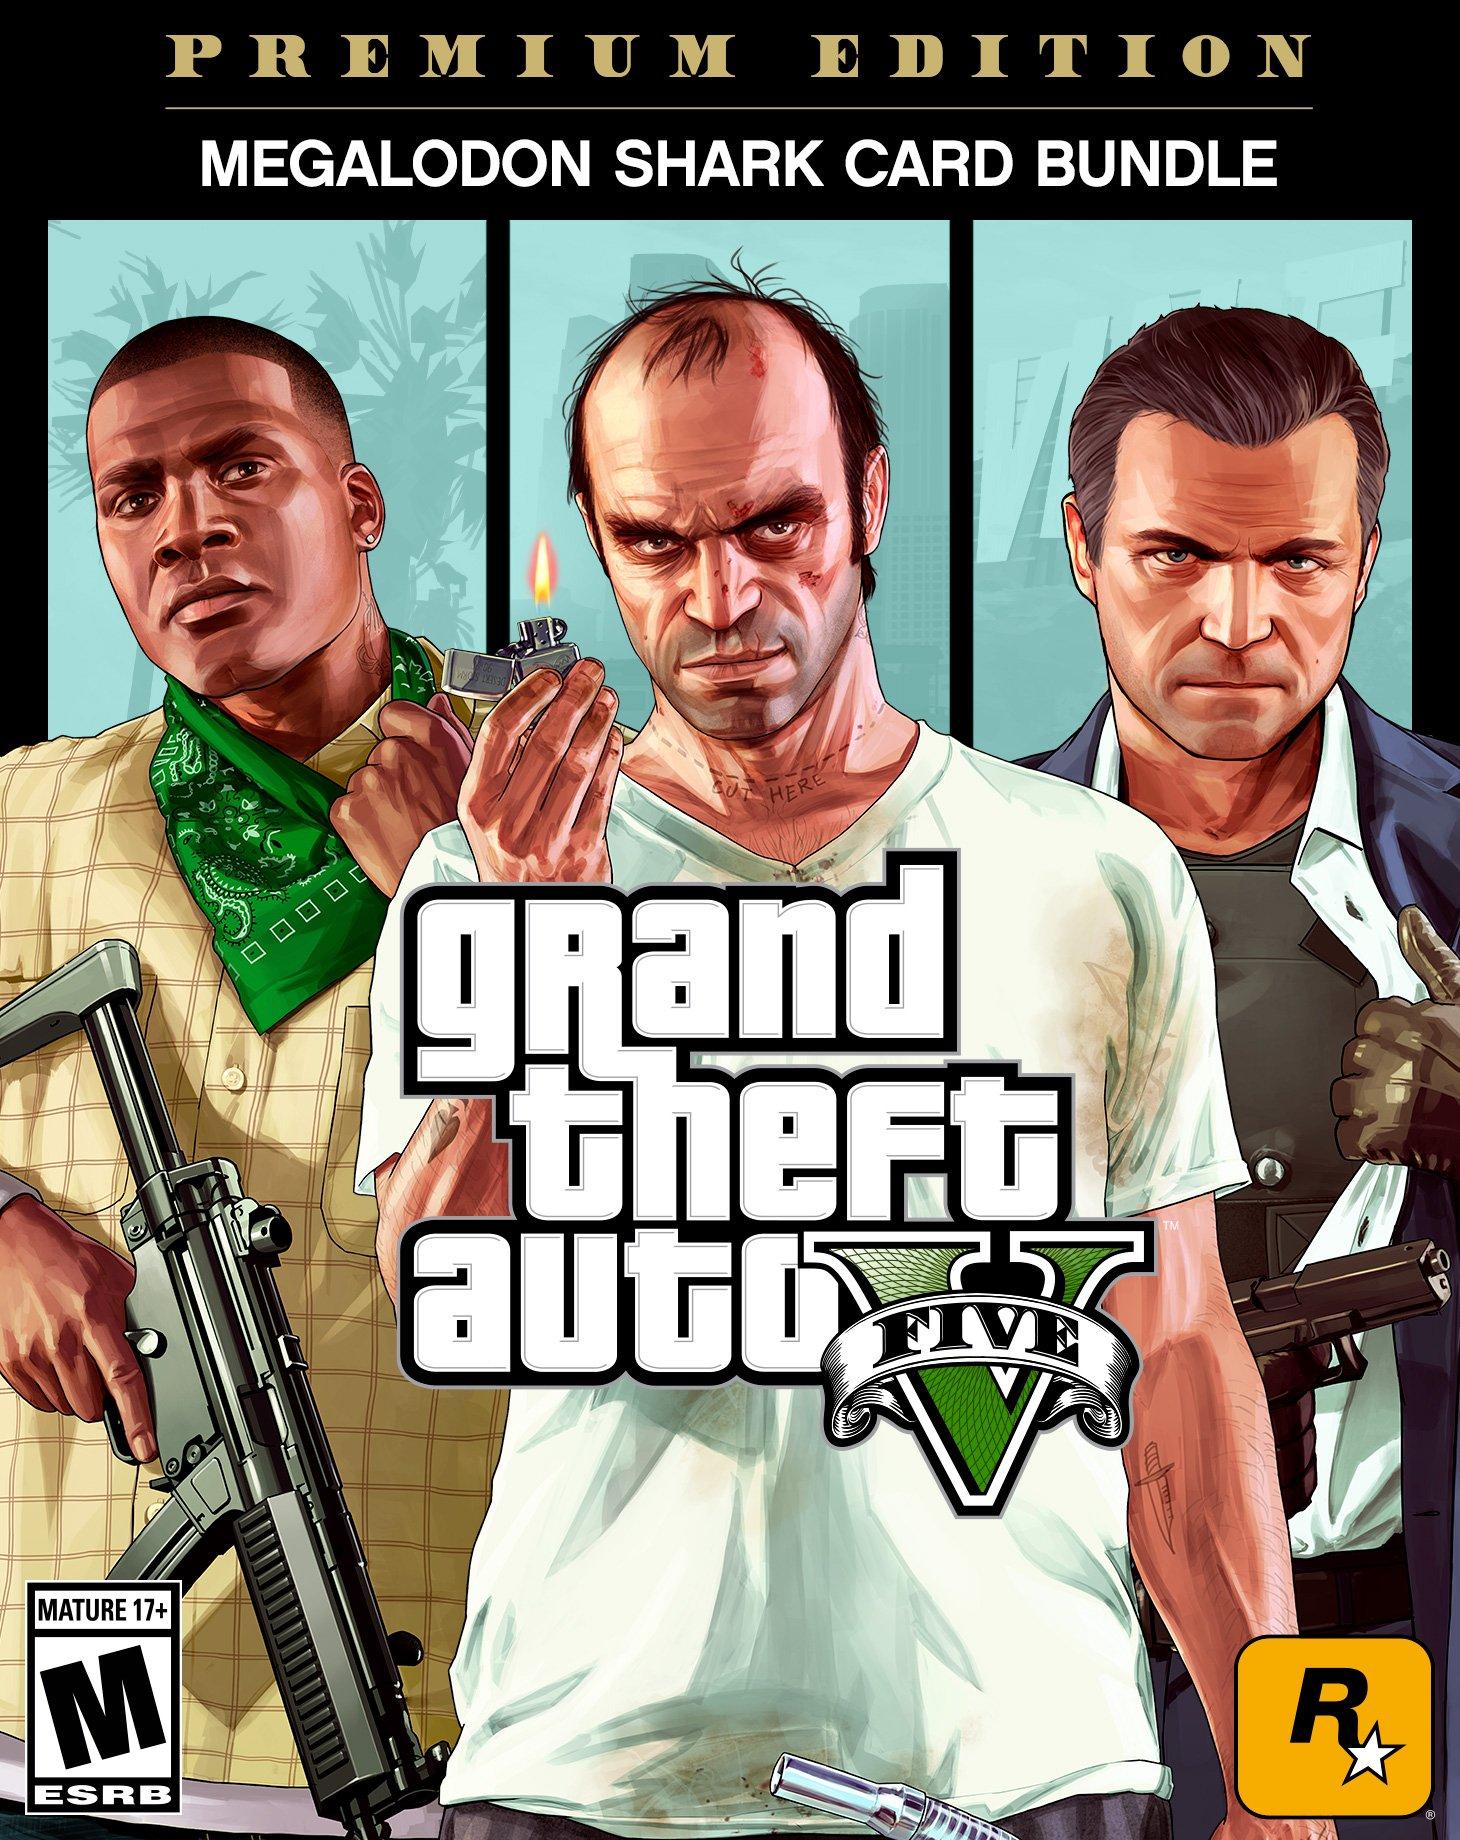 Grand Theft Auto V: Premium Edition and Megalodon Shark Card Bundle